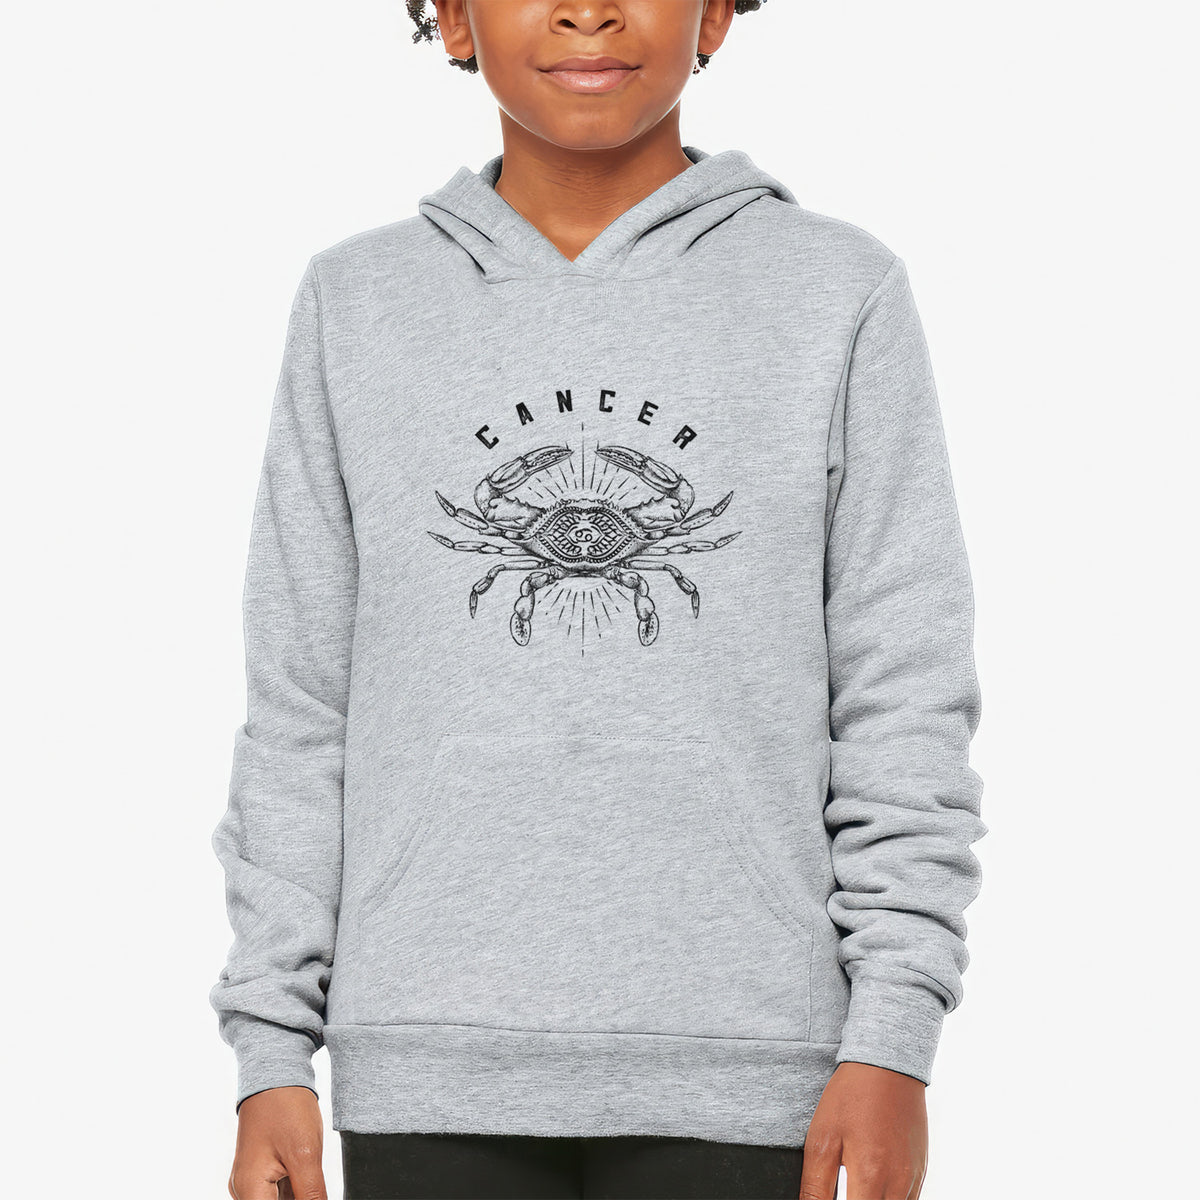 Cancer - Crab - Youth Hoodie Sweatshirt